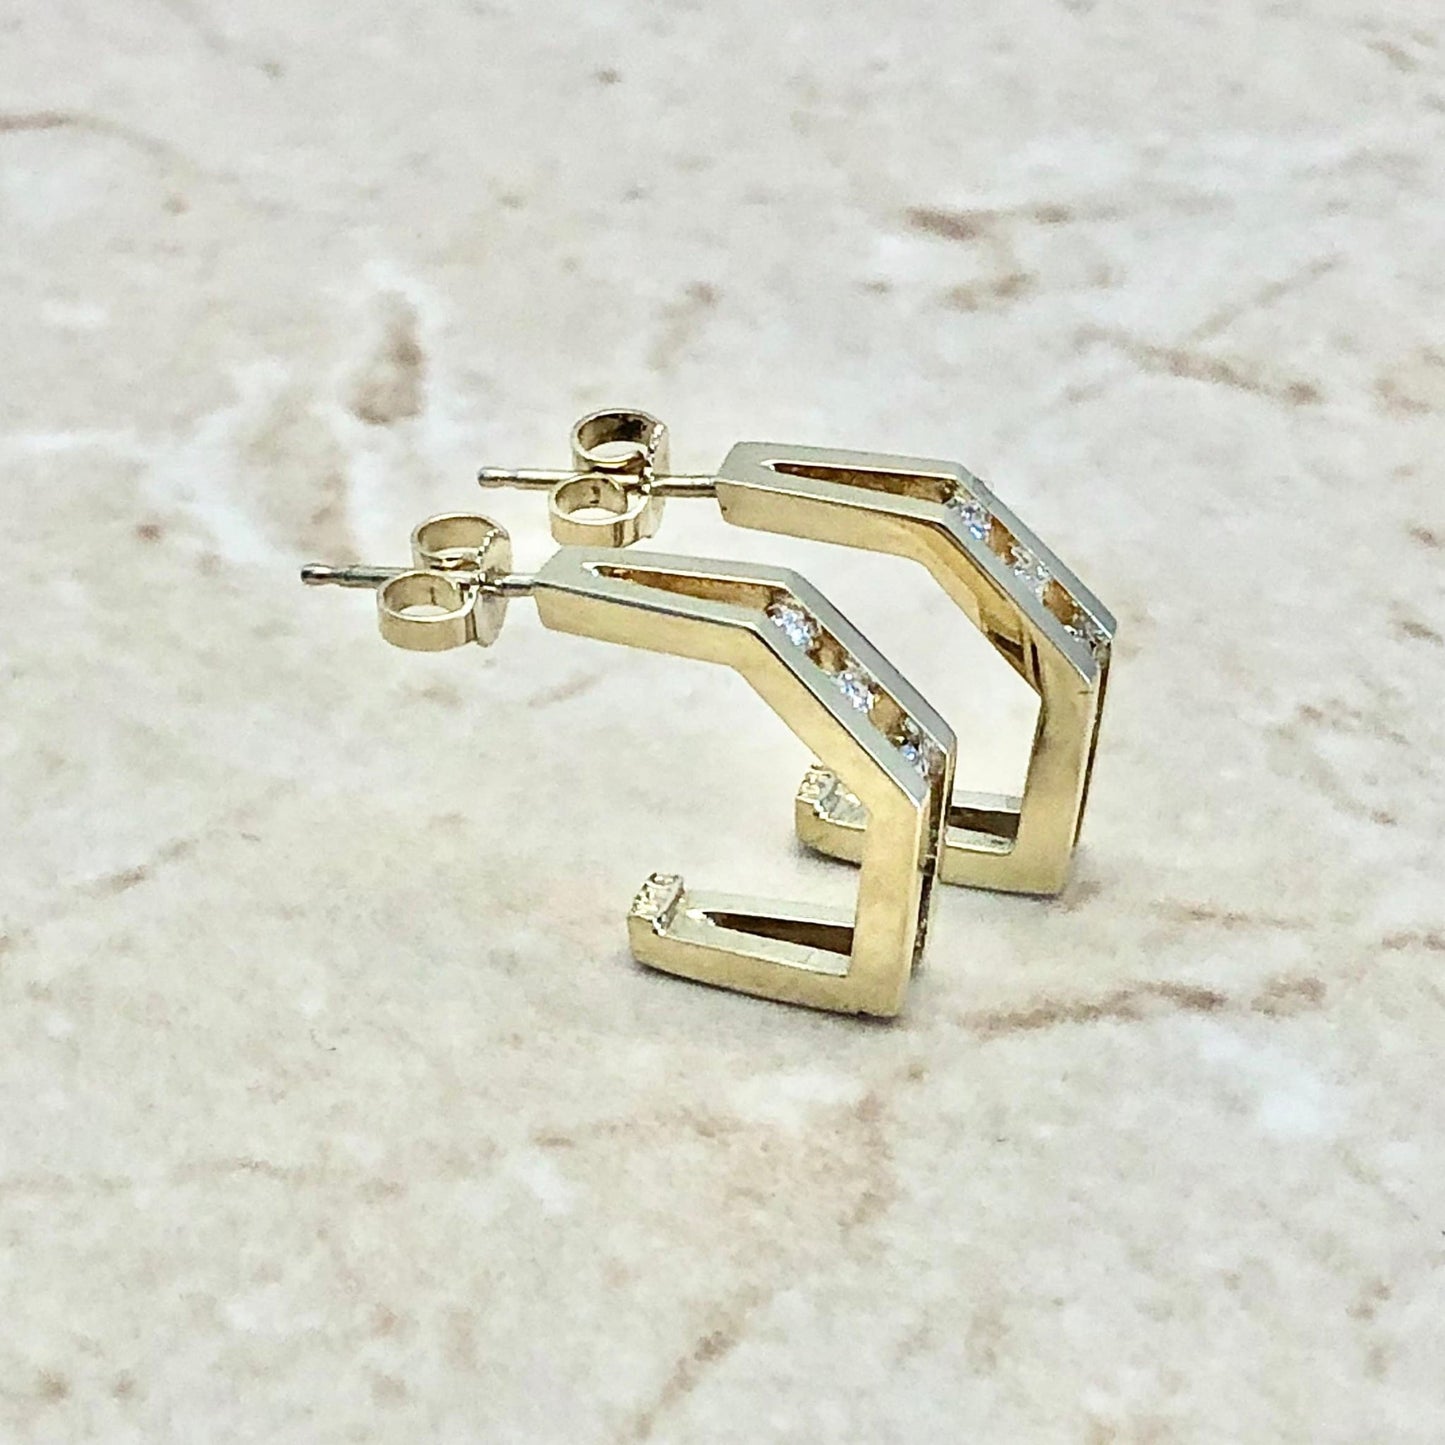 14K Diamond Half Hoop Earrings - Yellow Gold Diamond Earrings - Gold Earrings - April Birthstone Earrings - Birthday Gift - Gifts For Her